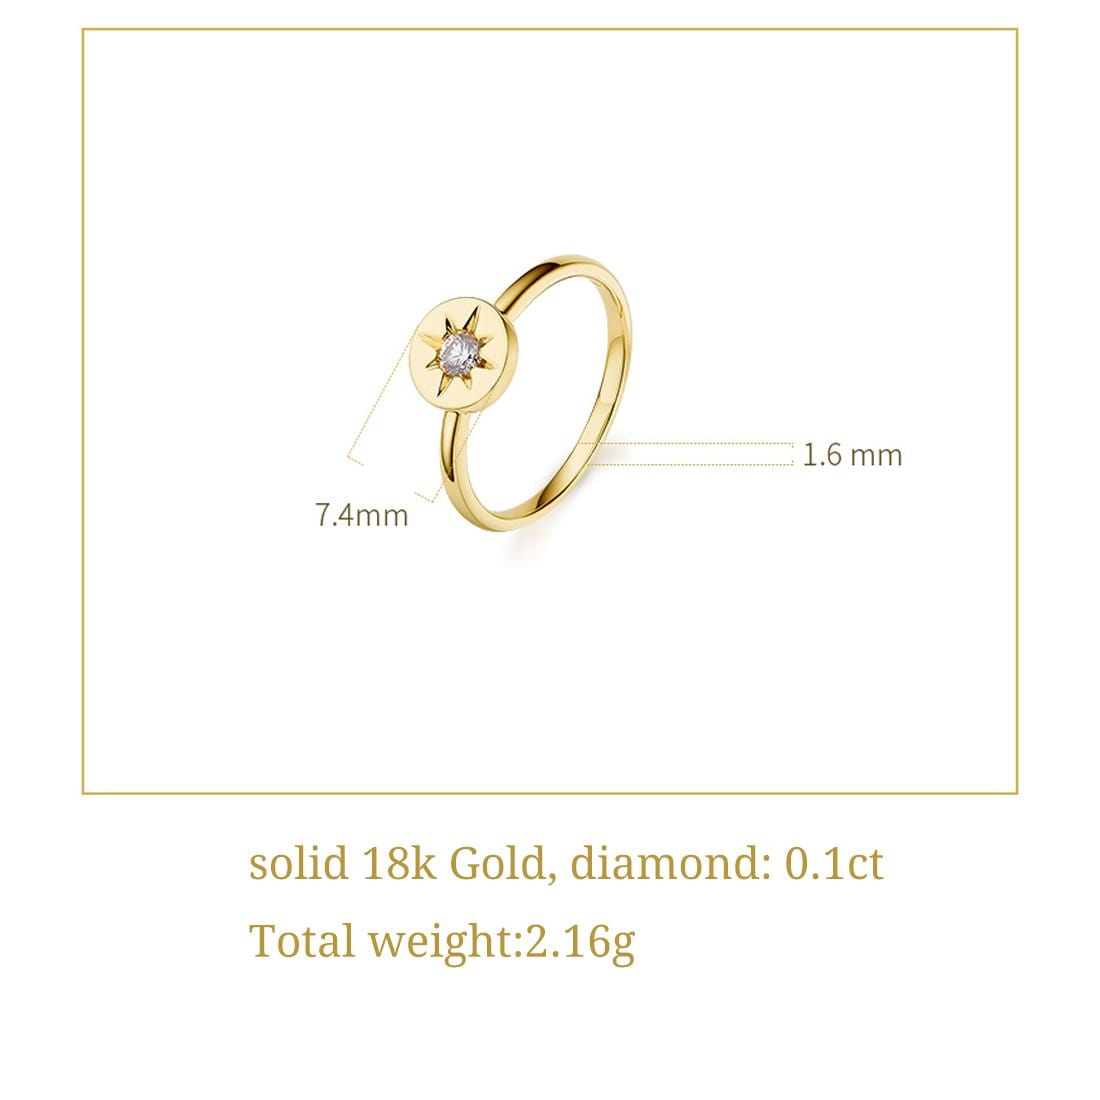 Celestial star yellow gold ring with white diamond